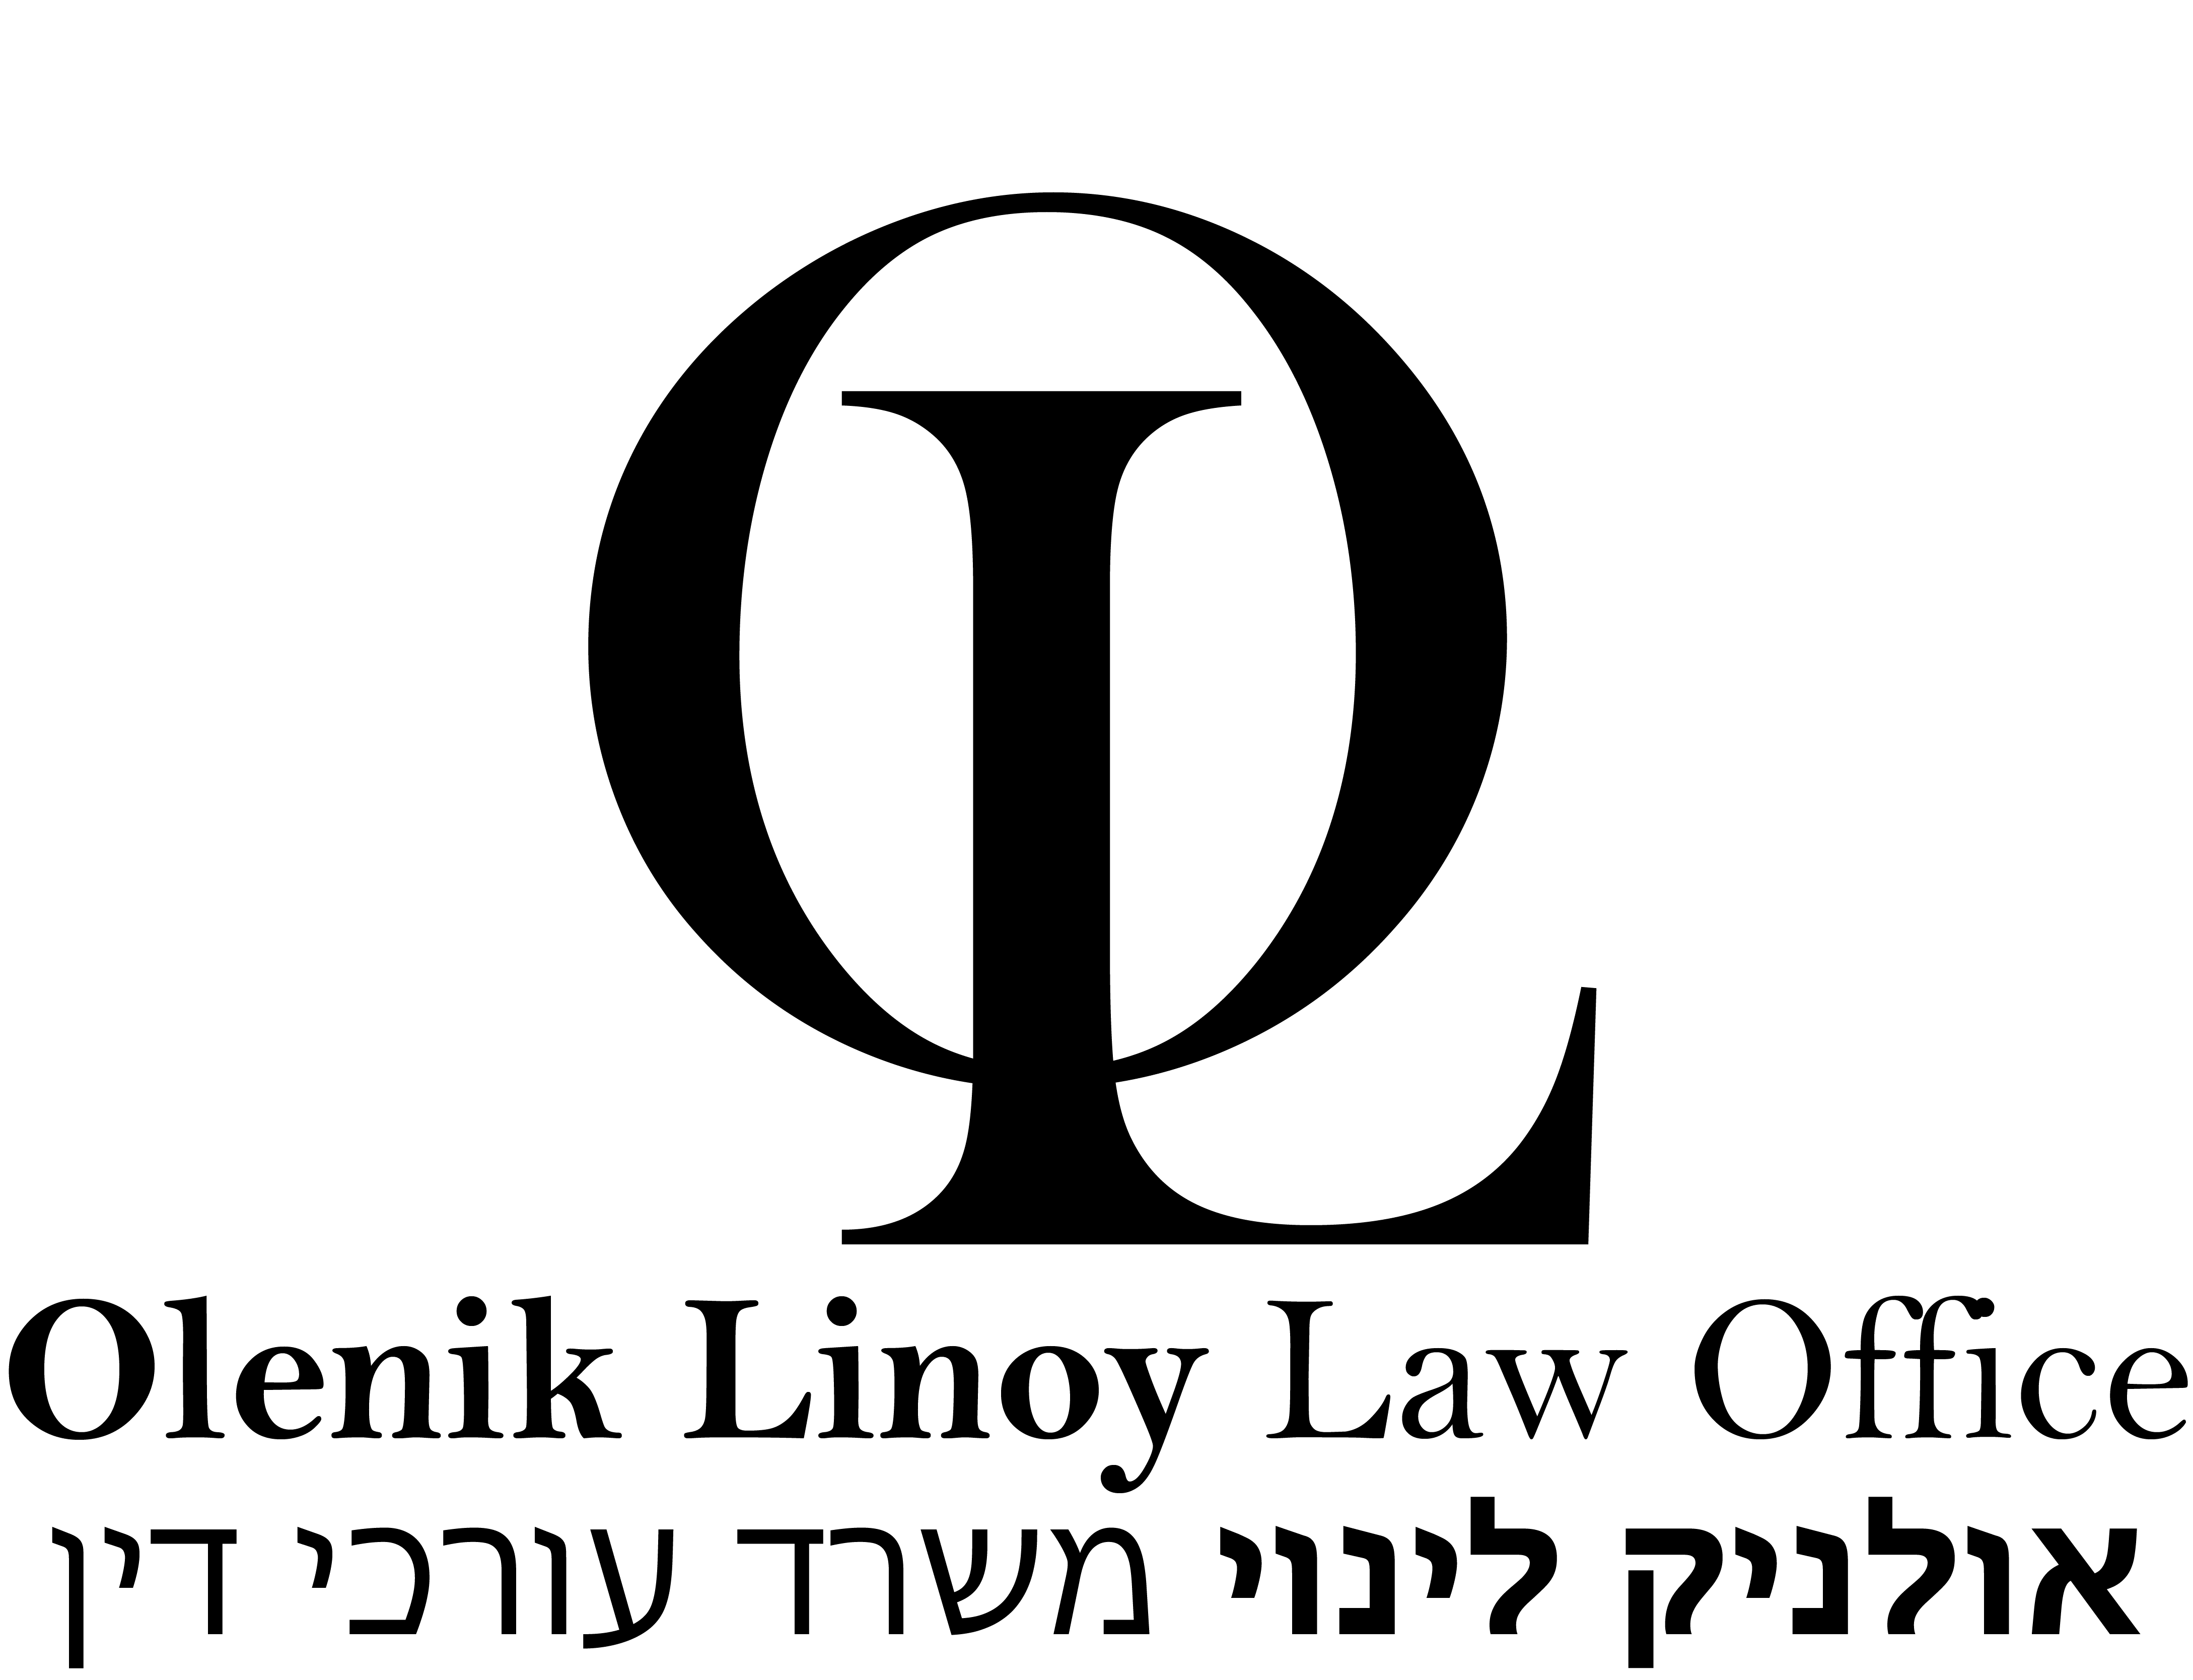 Olenik Linoy Law Office